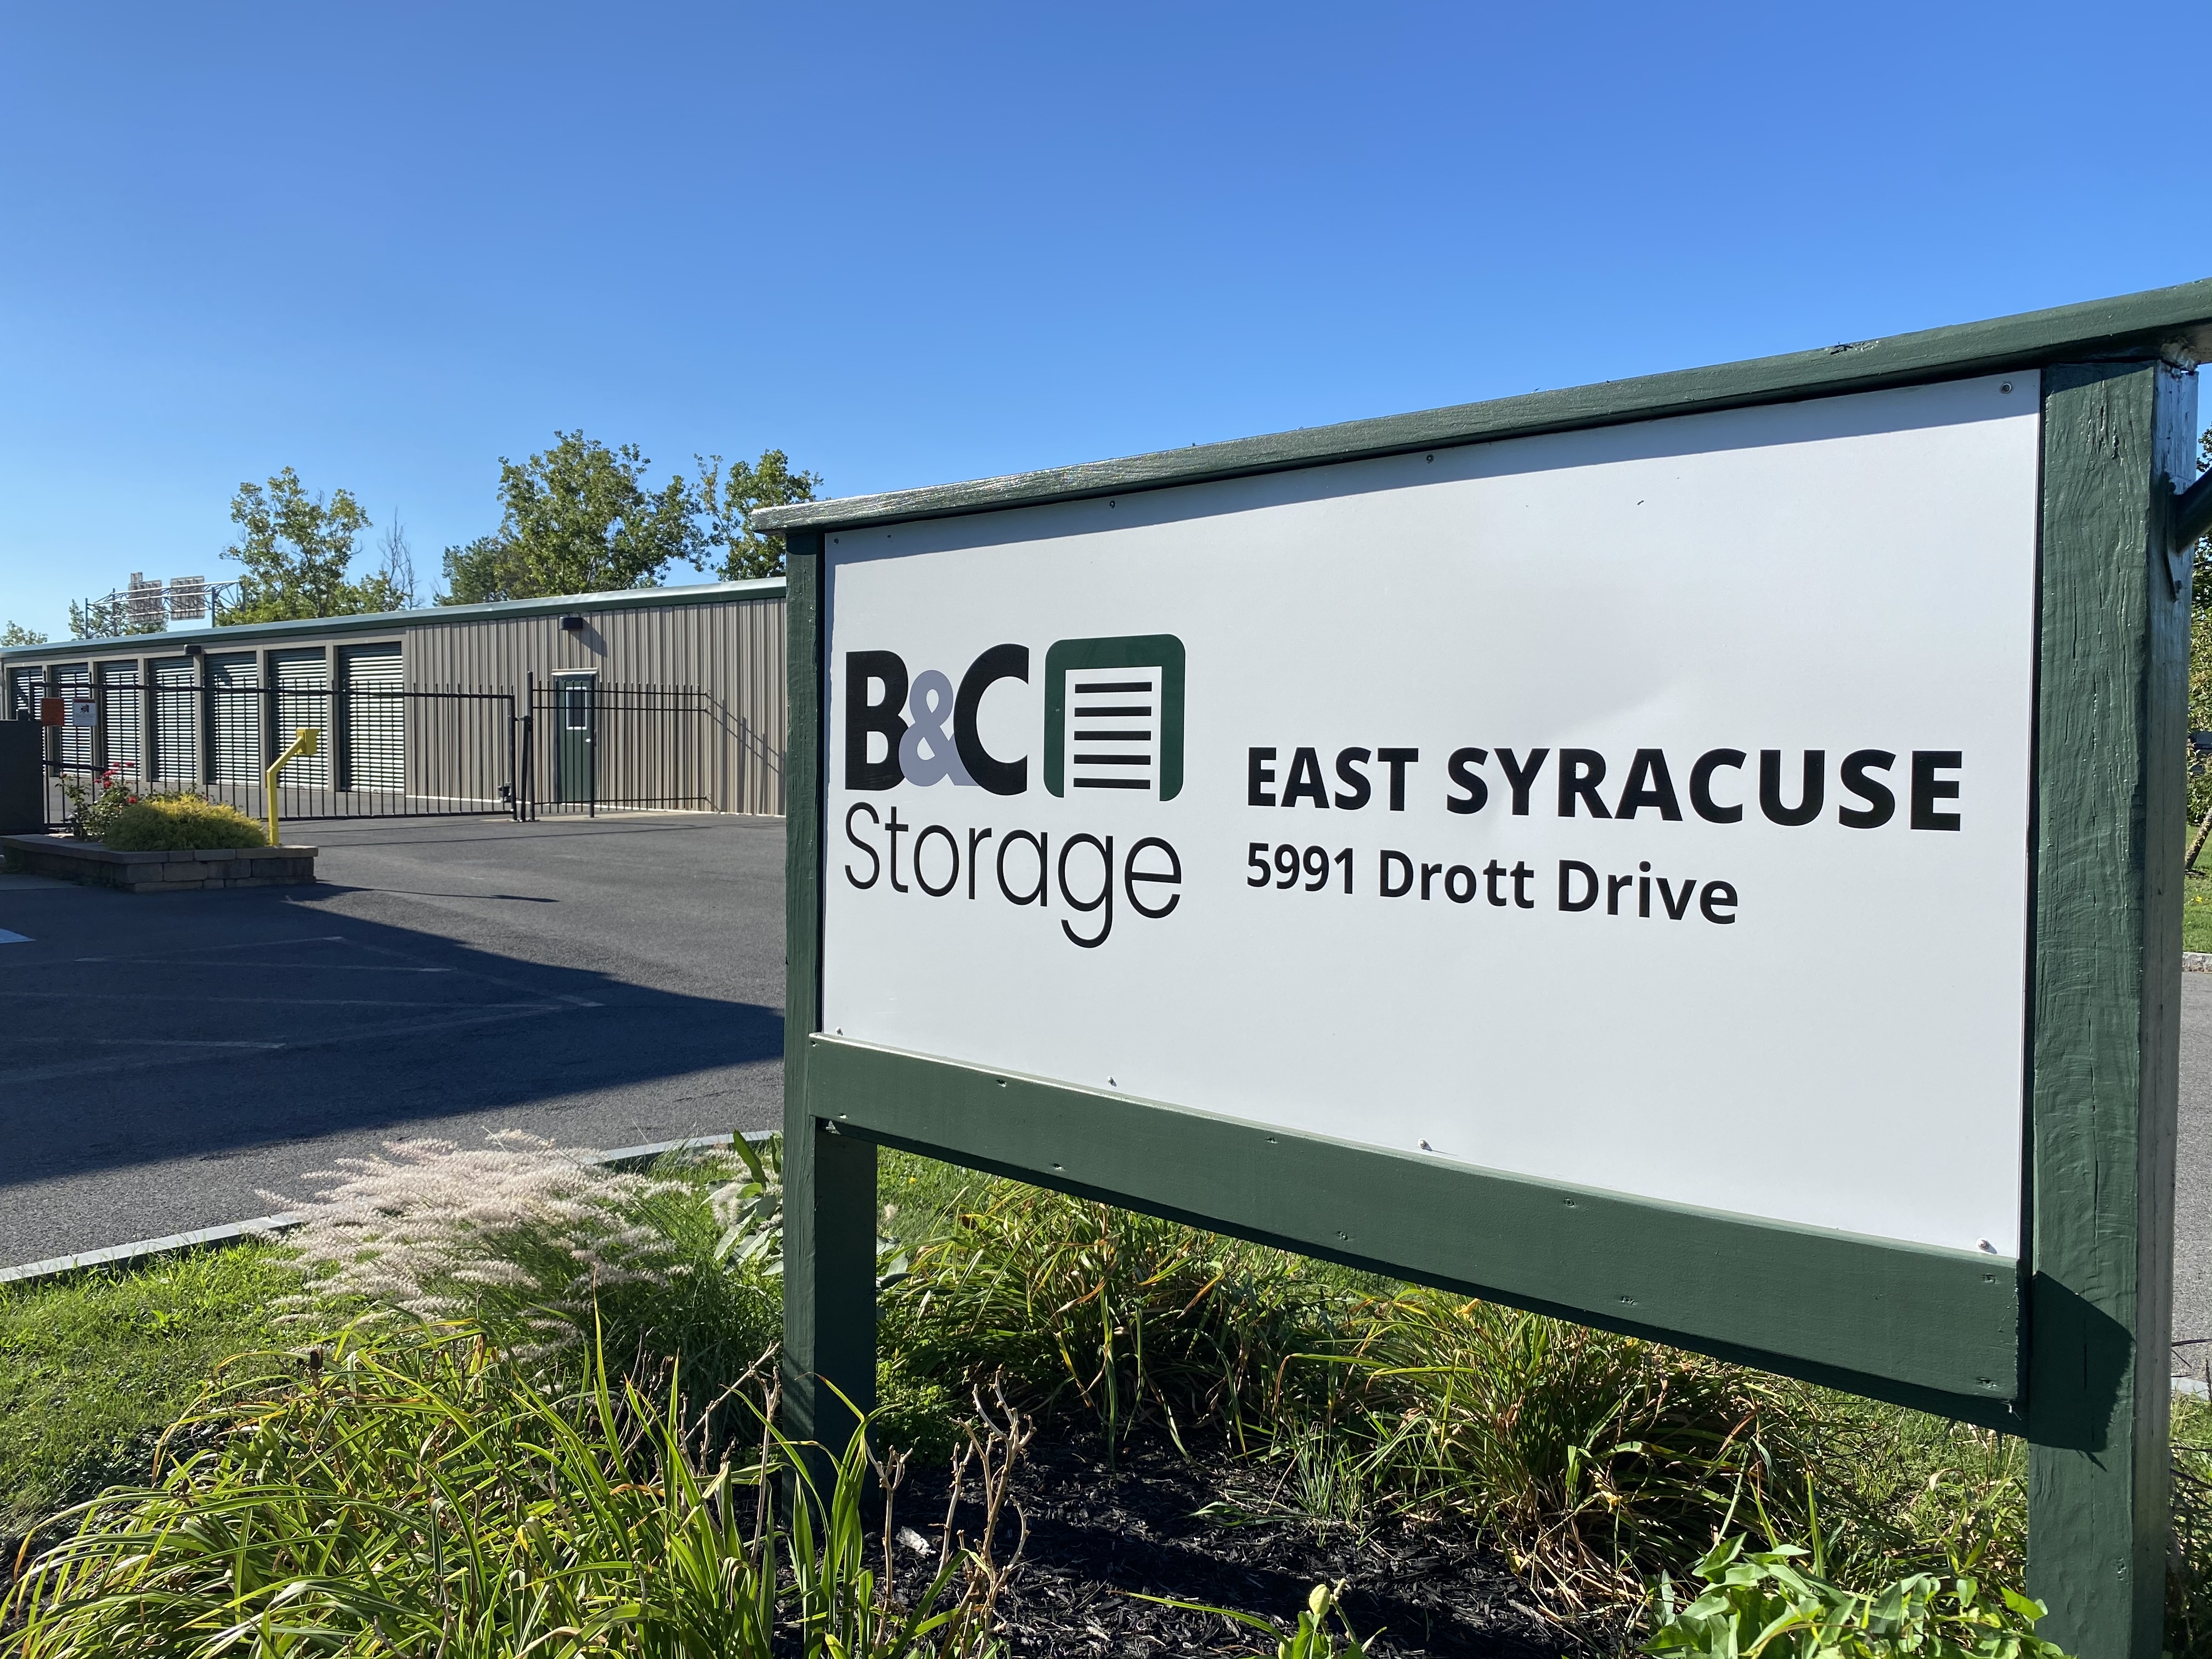 b&c self storage in east syracuse ny